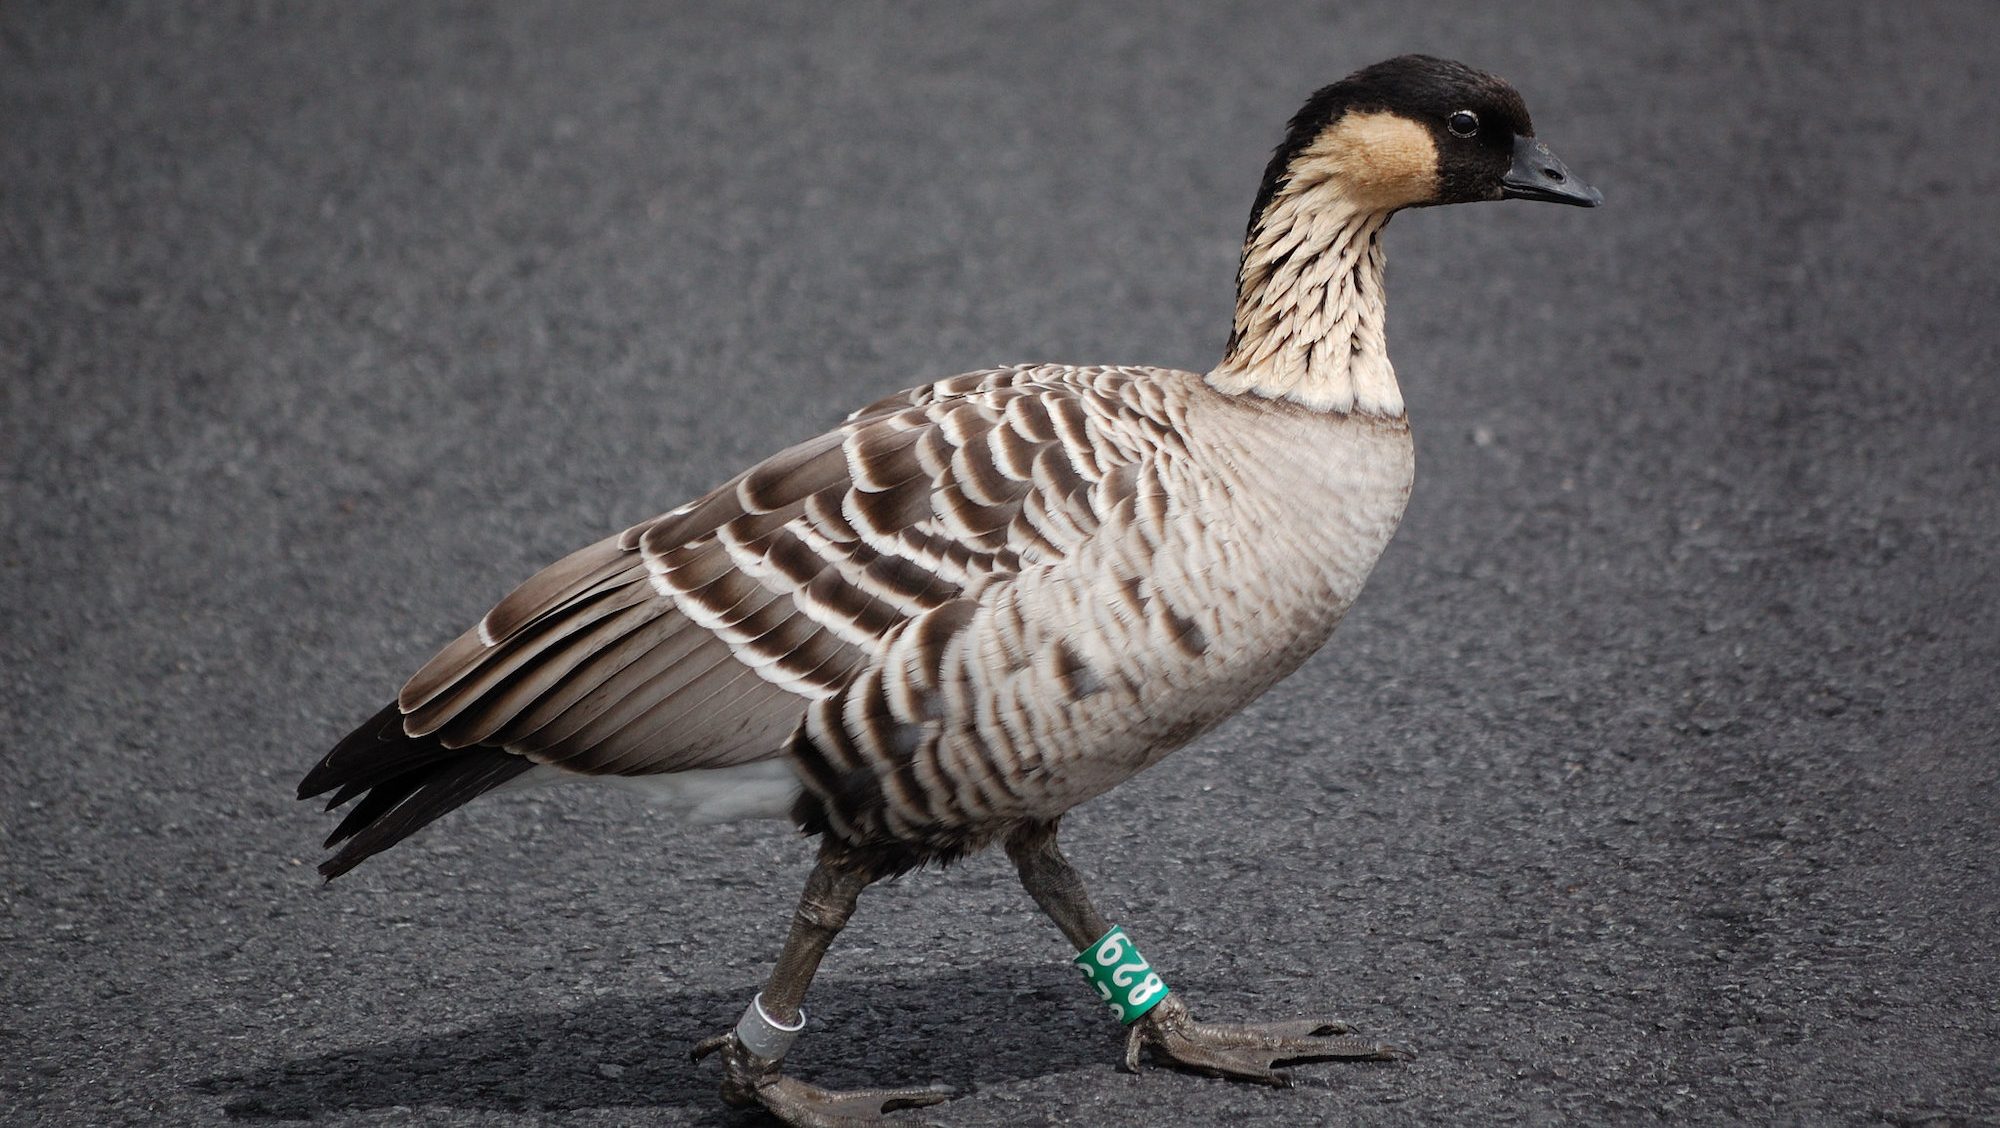 small goose walking across pavement